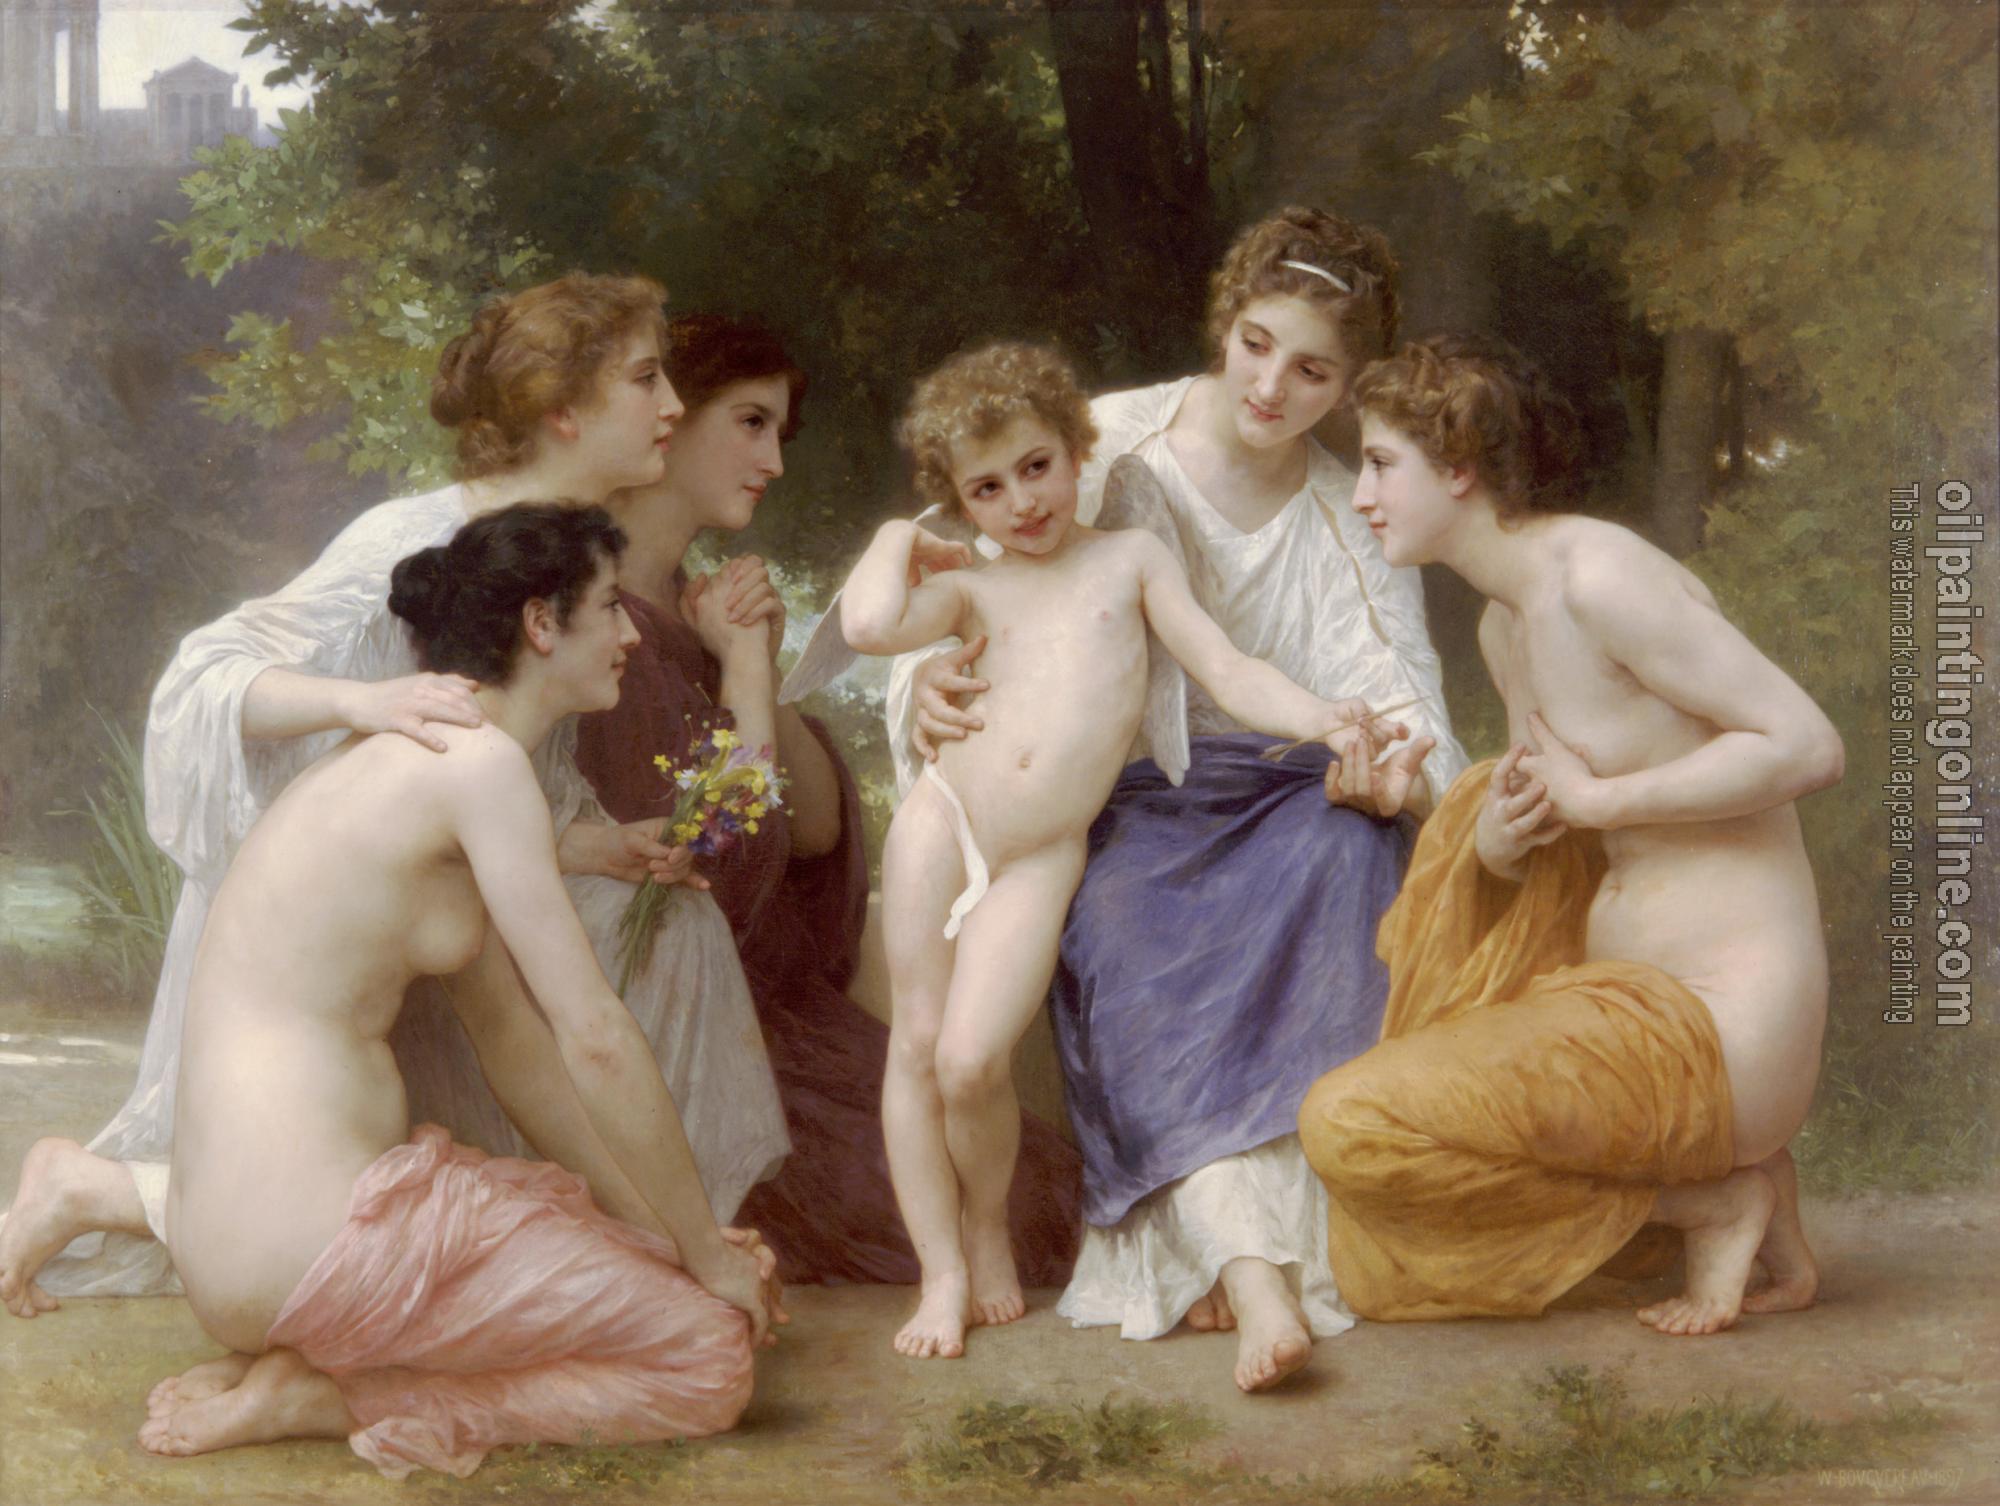 Bouguereau, William-Adolphe - Admiration